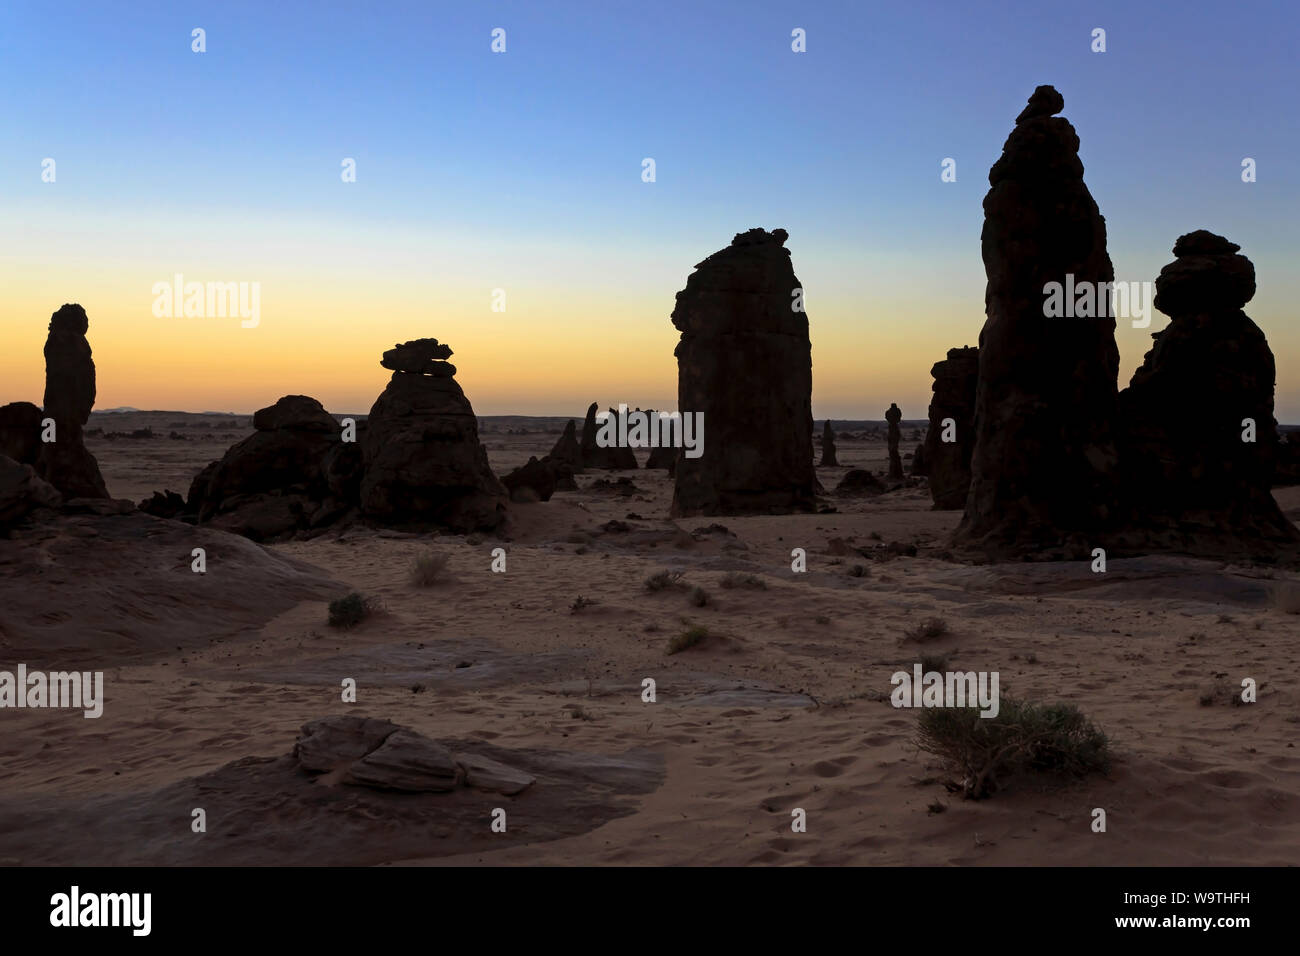 Silhouette of rock formations in the desert, Riyadh, Saudi Arabia Stock Photo